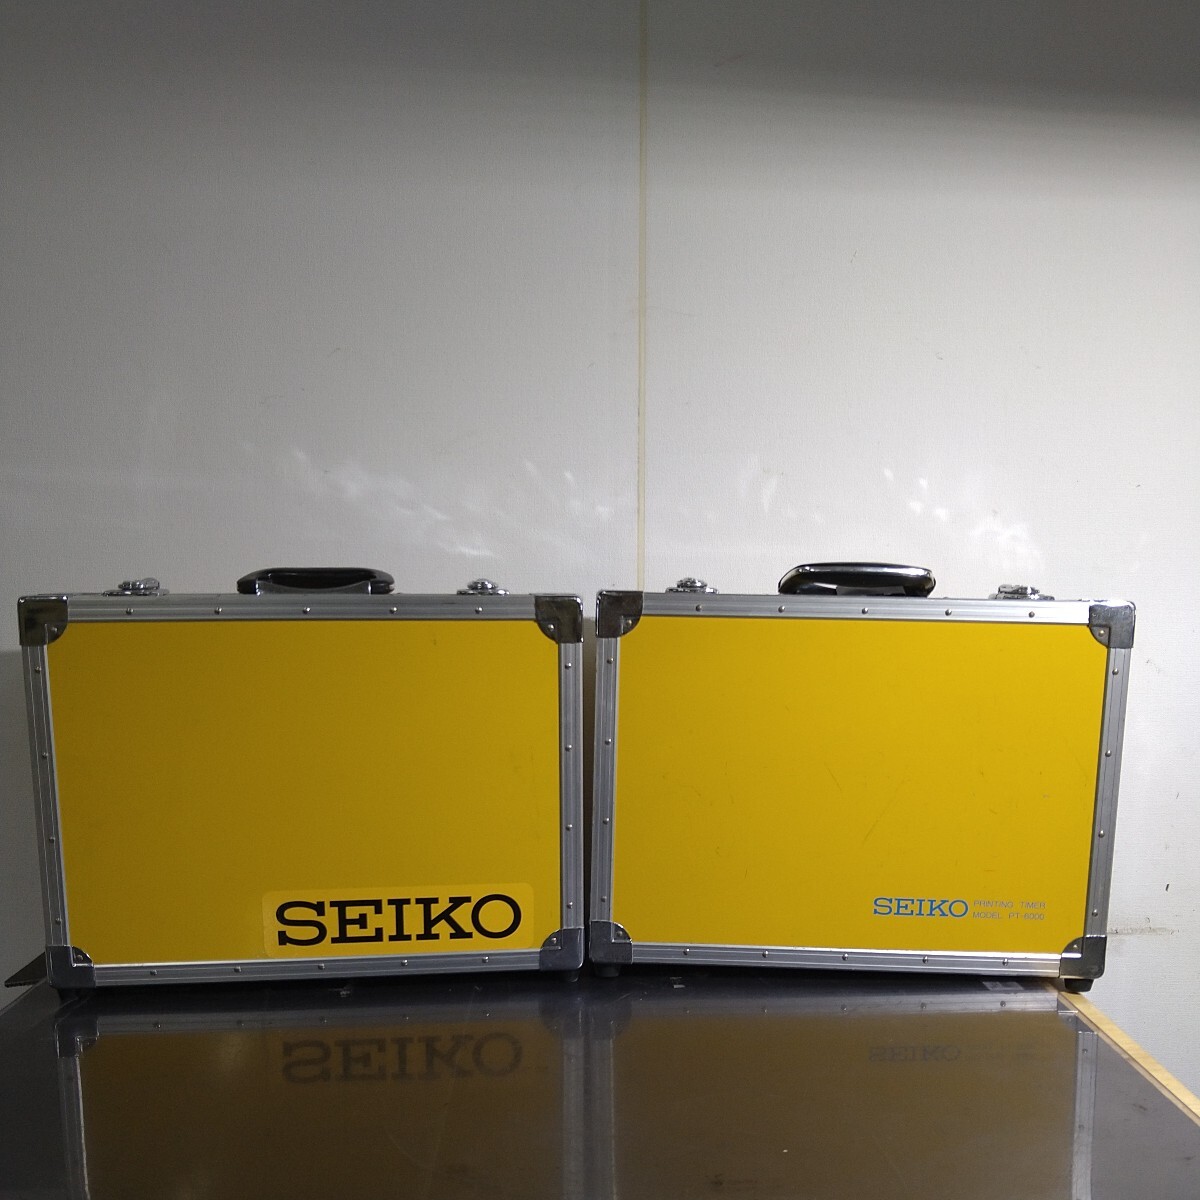 DS014.型番:PT-6000.0219.競泳用自動審判計時装置.2台.SEIKO.ジャンクの画像1